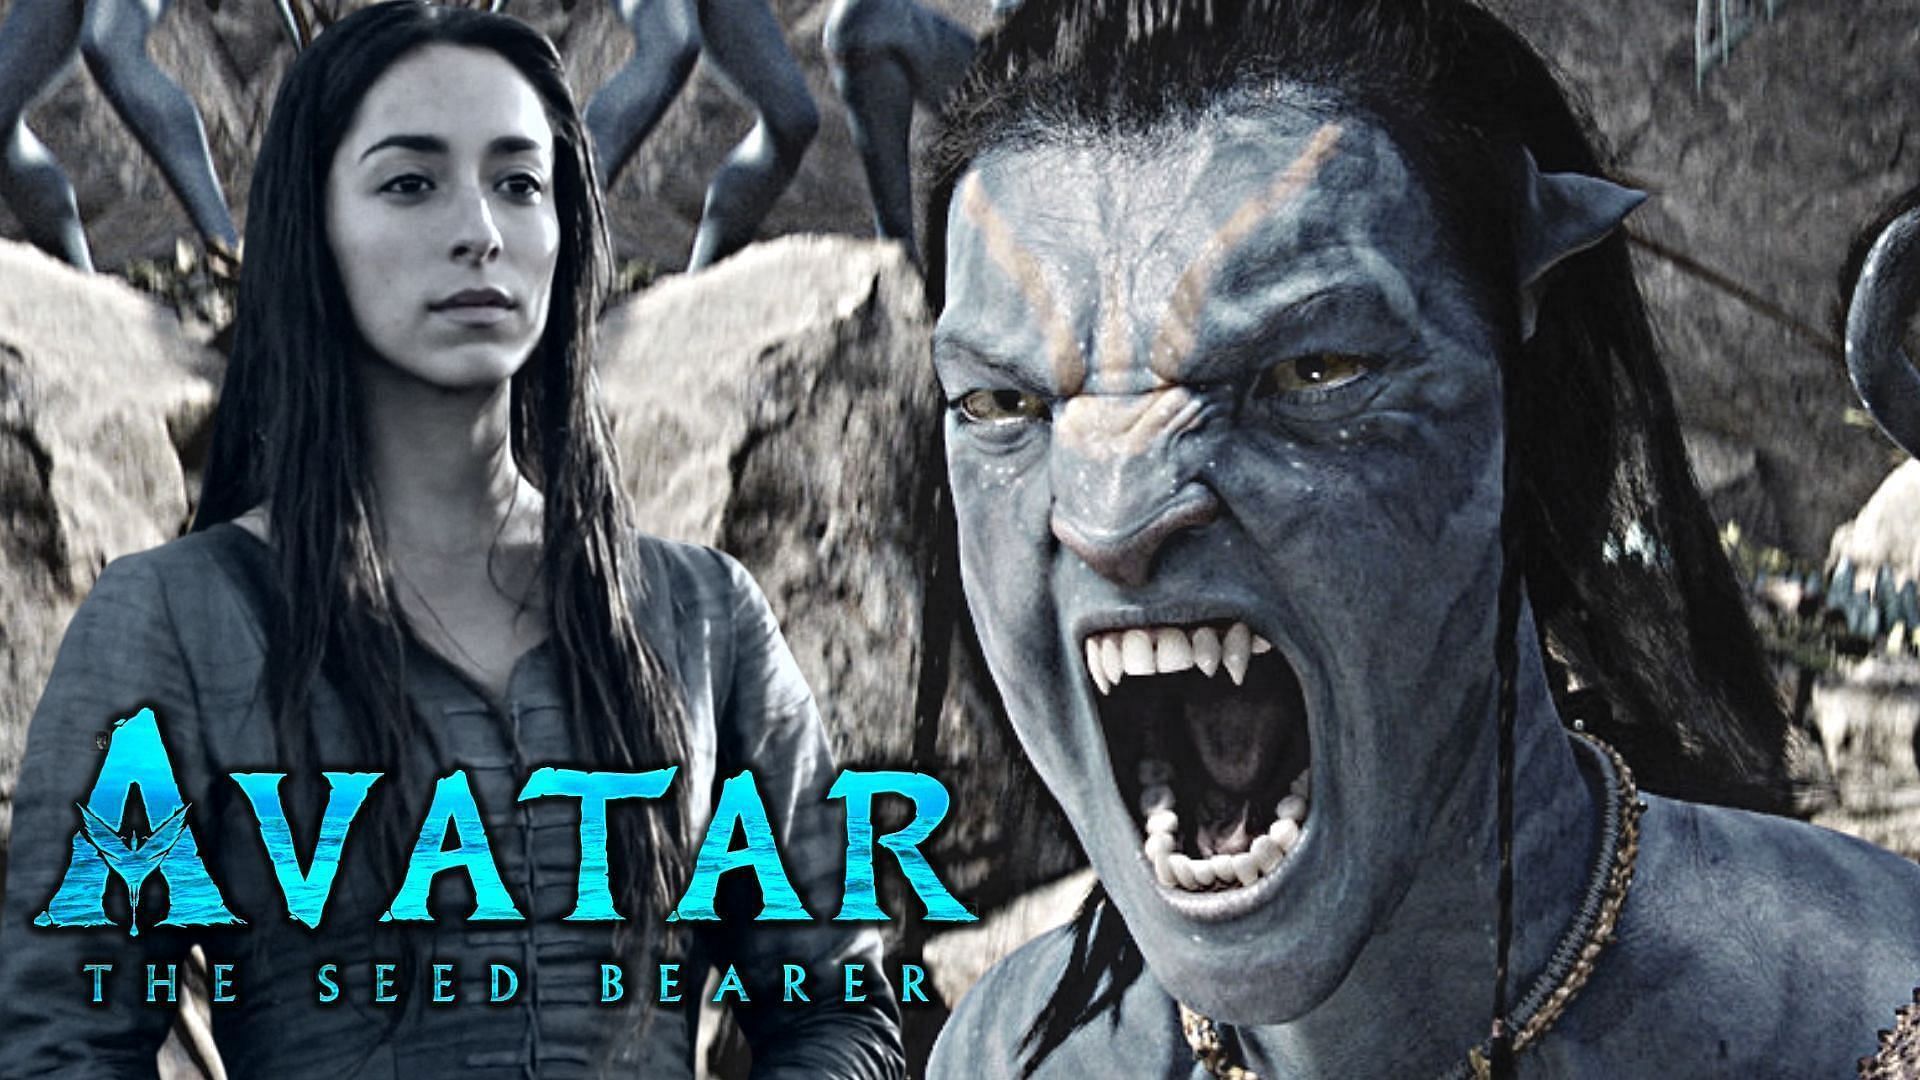 Avatar: The Seed Bearer villain Oona Chaplin (Image via Sportskeeda)